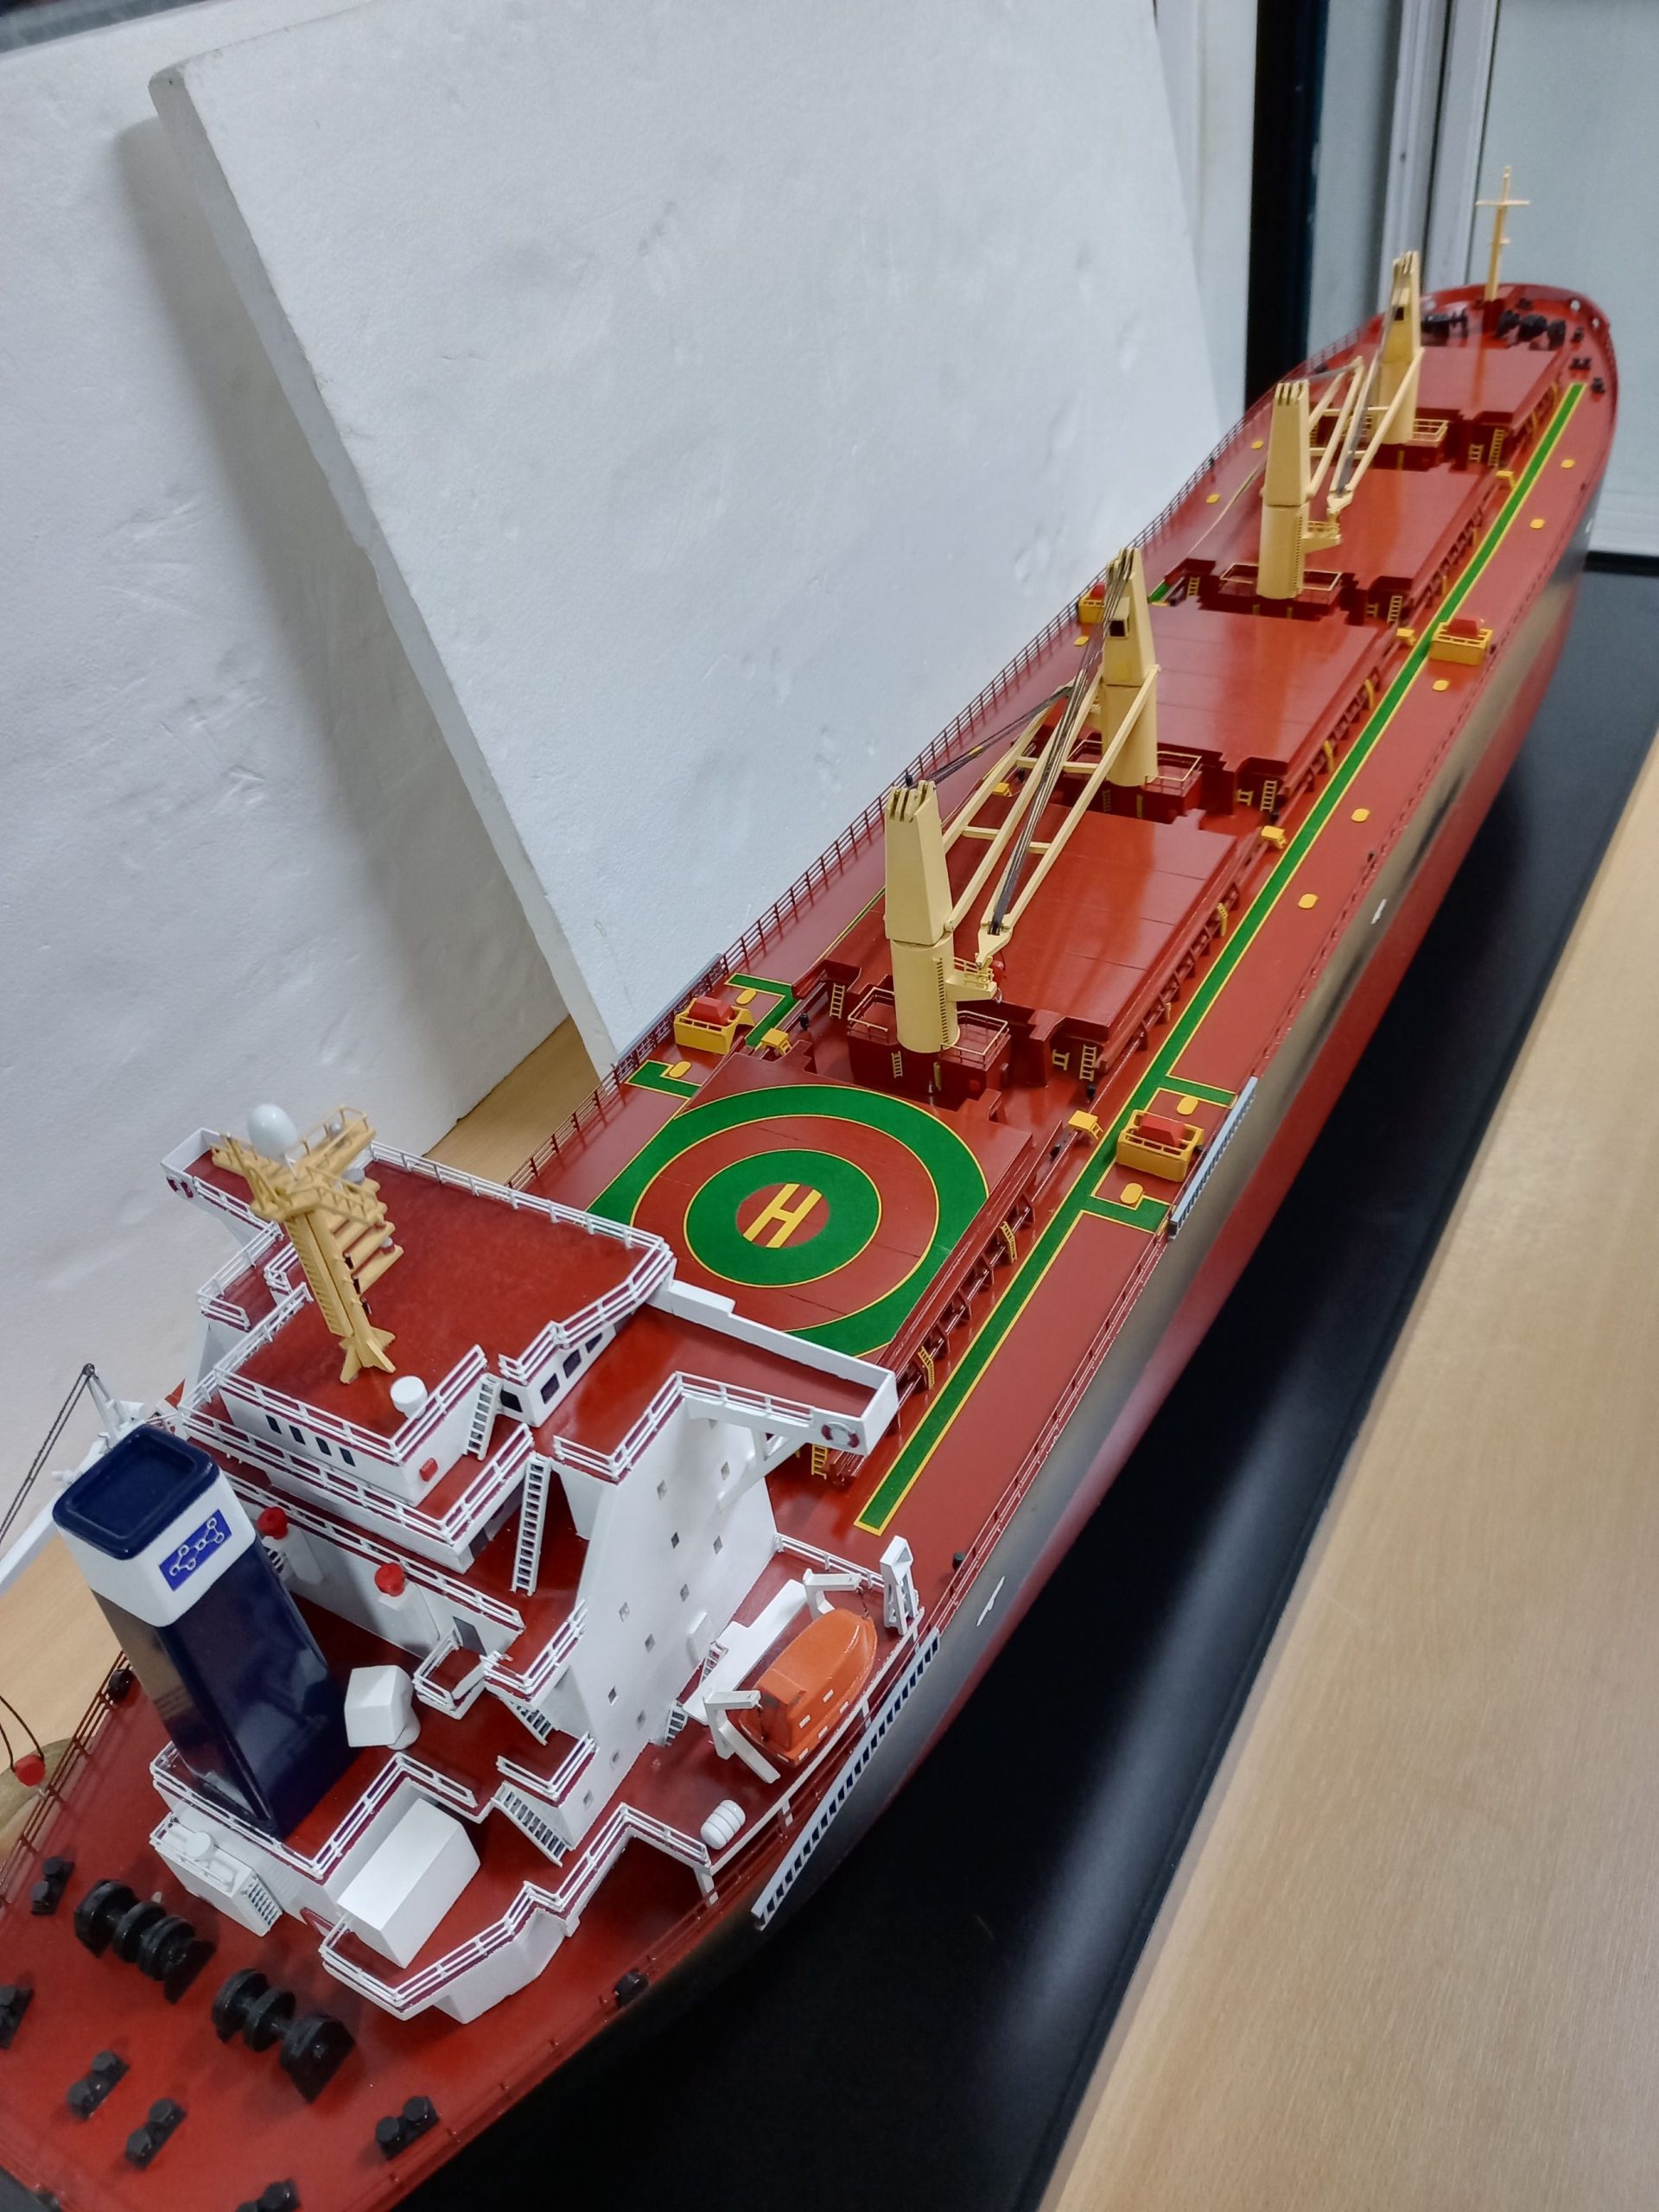 MV Ellie Model Ship - PSM5686